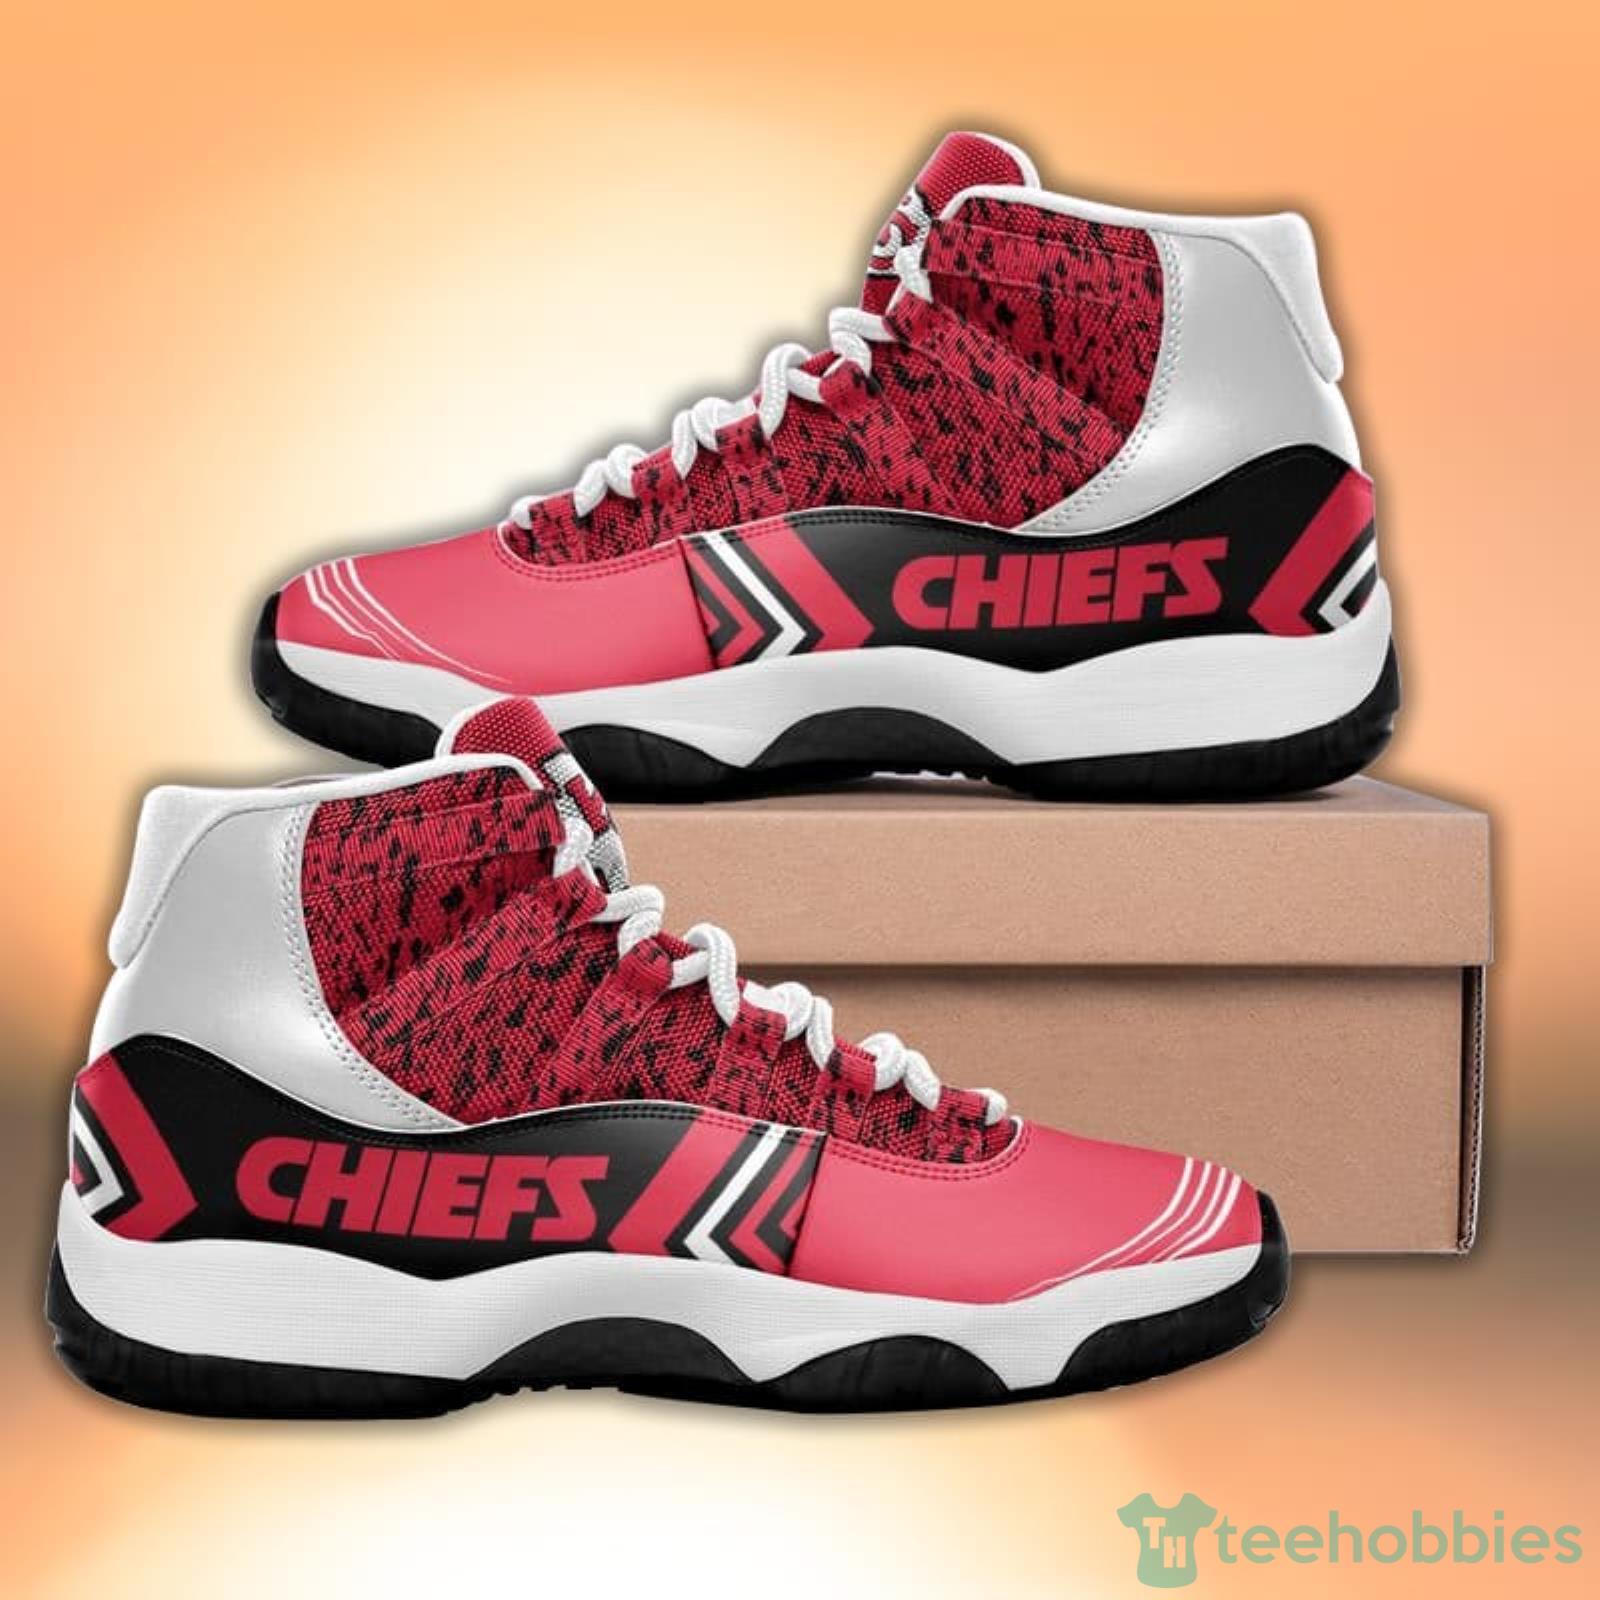 Kansas City Chiefs Fans Pattern Camo Style Sneaker Air Jordan 11 Shoes Product Photo 1